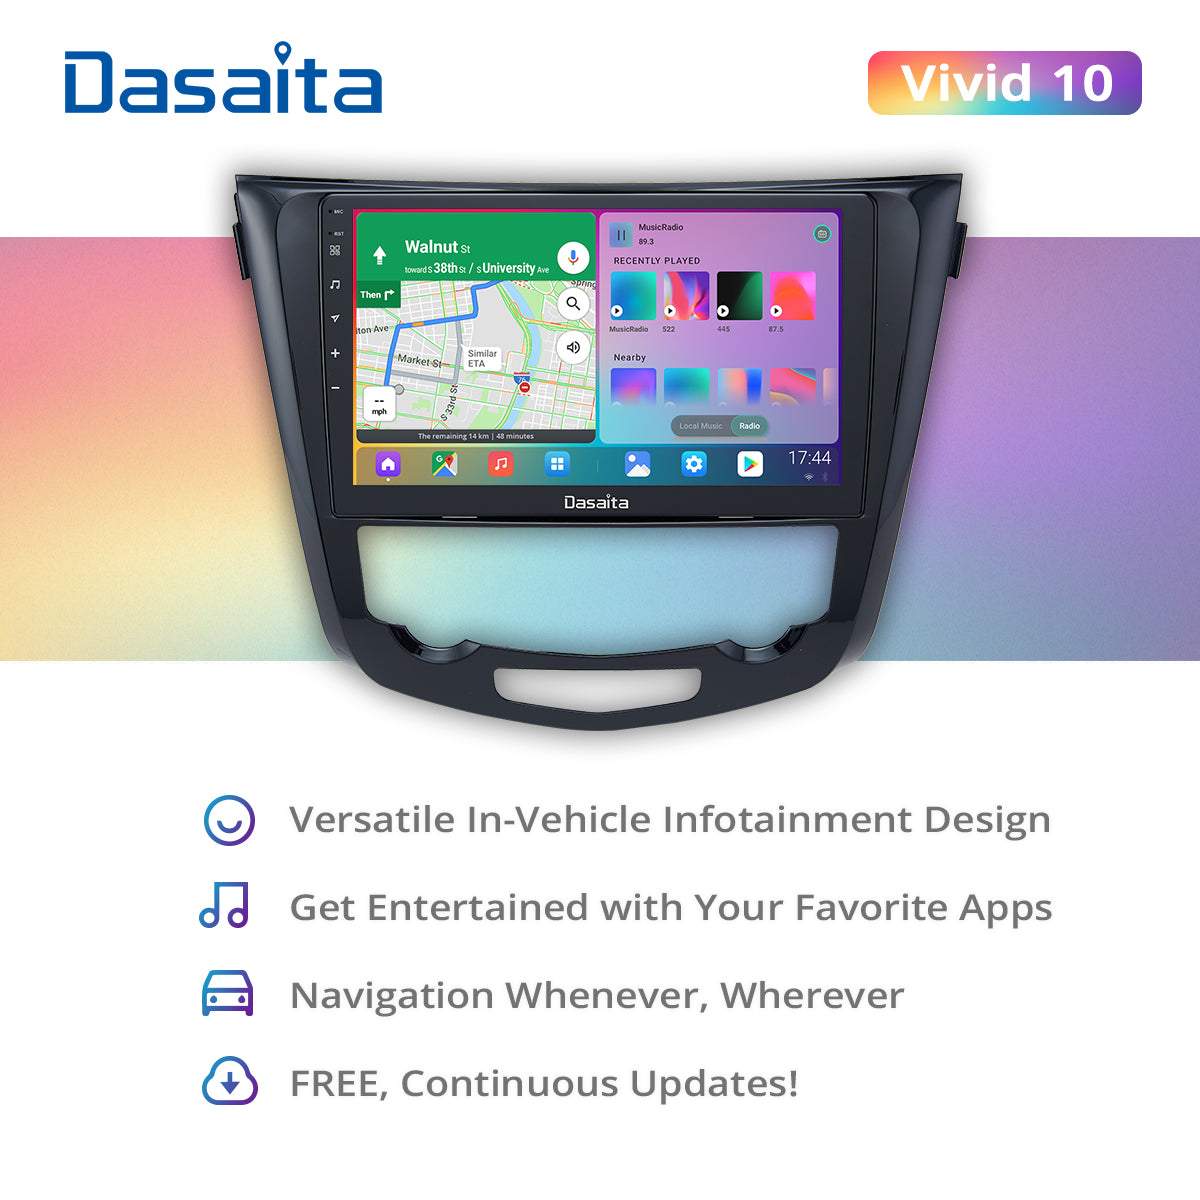 Dasaita Vivid10/Vivid11 Nissan X-Trail Qashqai Rogue 2014 2015 2016 2017 2018 2019 2020 Car Stereo 10.2 Inch Carplay Android Auto PX6 4G+64G Android10/Android11 1280*720 DSP AHD Radio